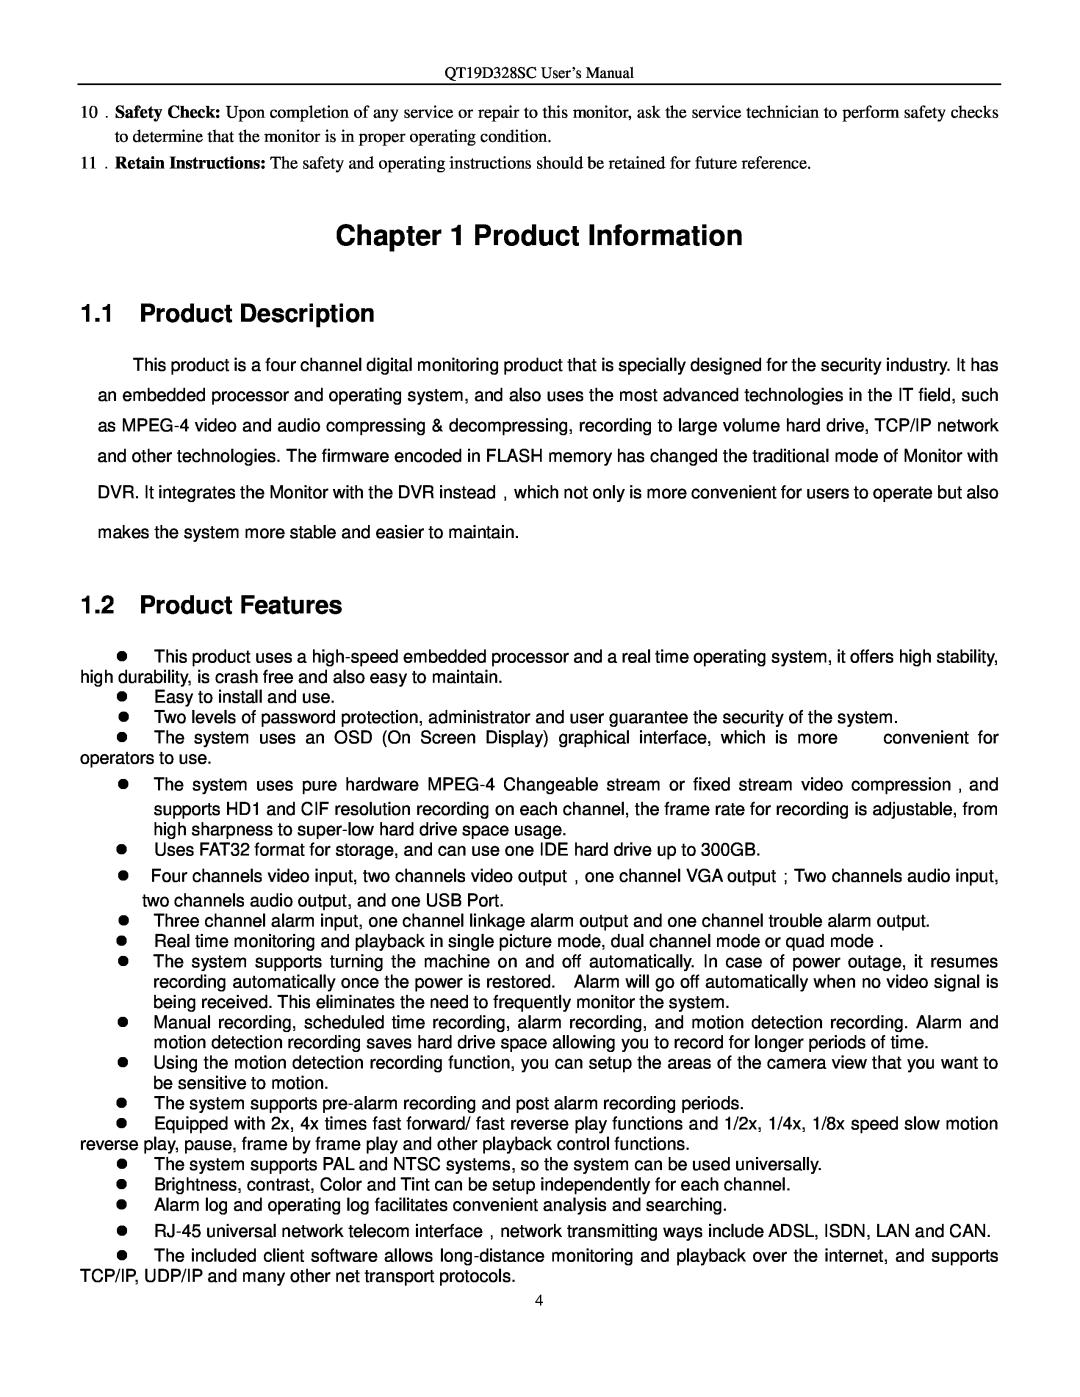 Q-See QT17D324SC user manual Product Information, Product Description, Product Features 